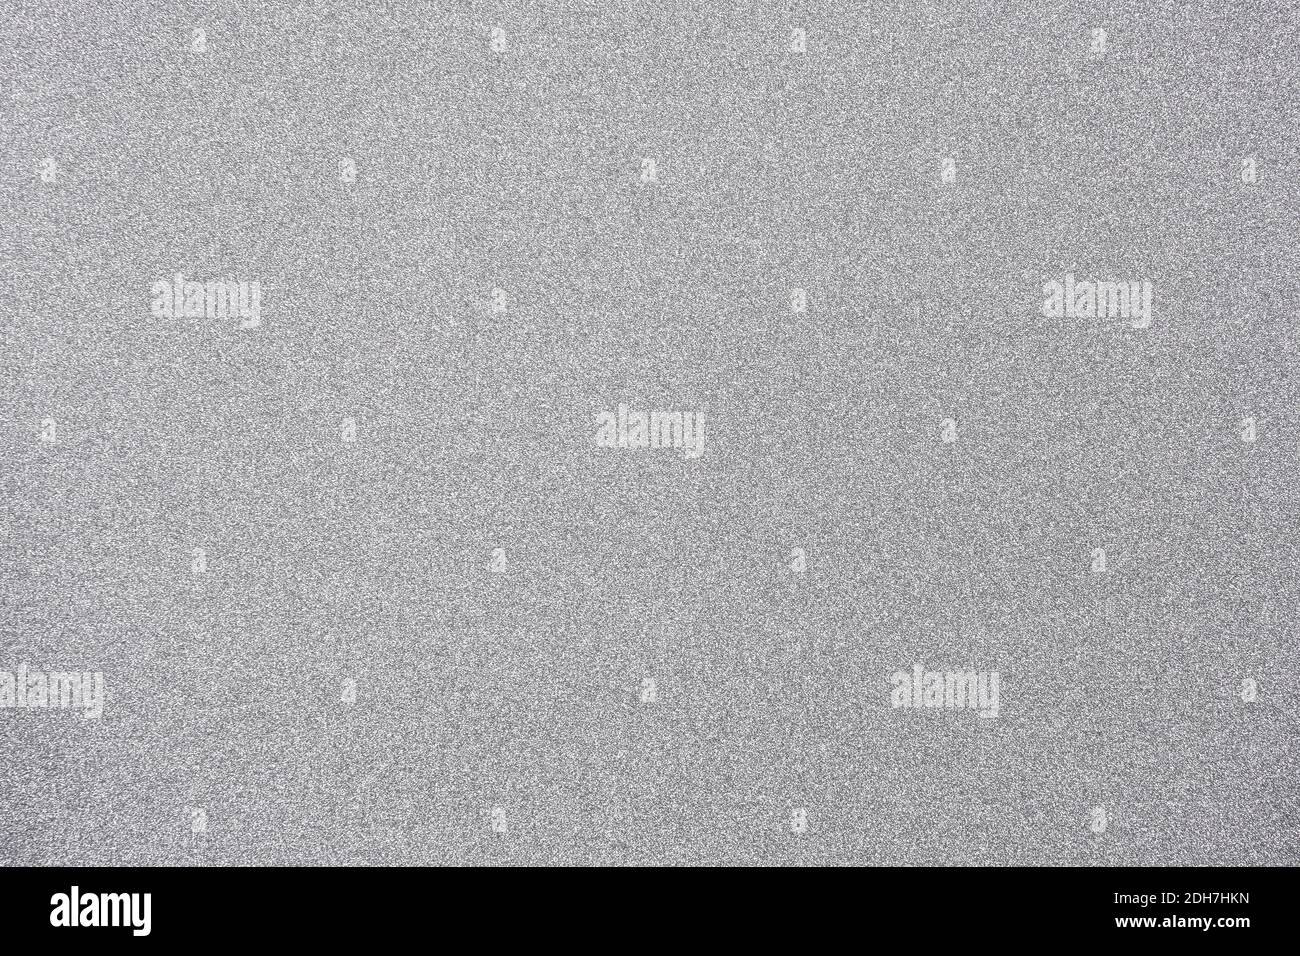 silver glitter texture background - textured gray pattern Stock Photo